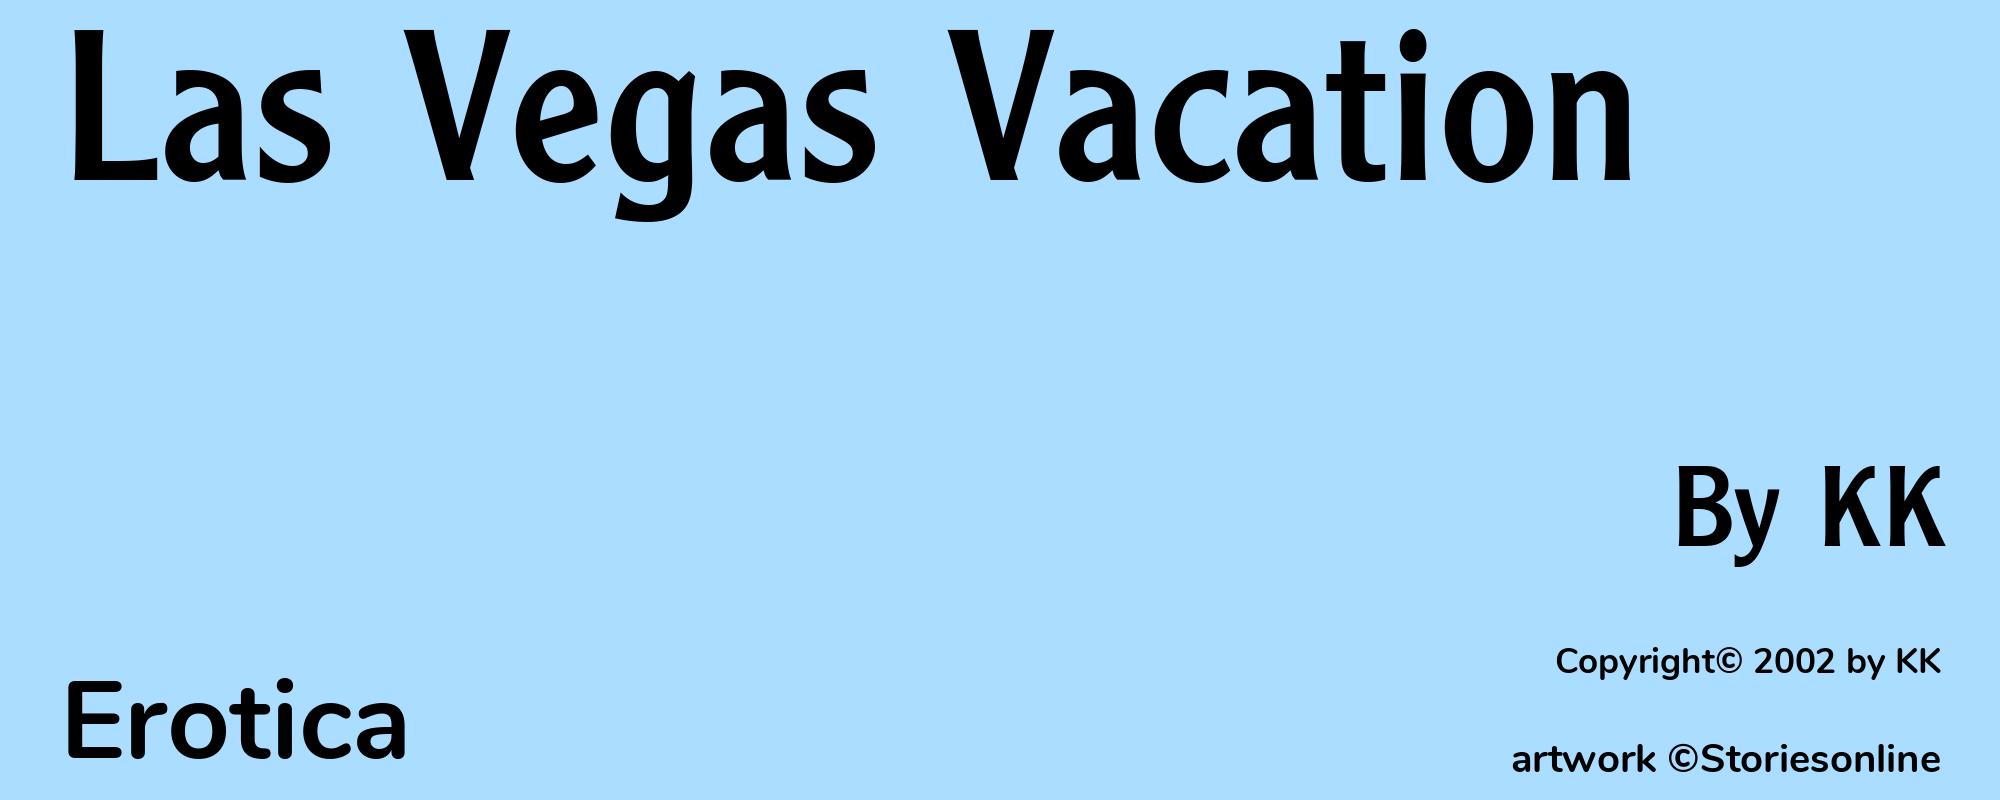 Las Vegas Vacation - Cover